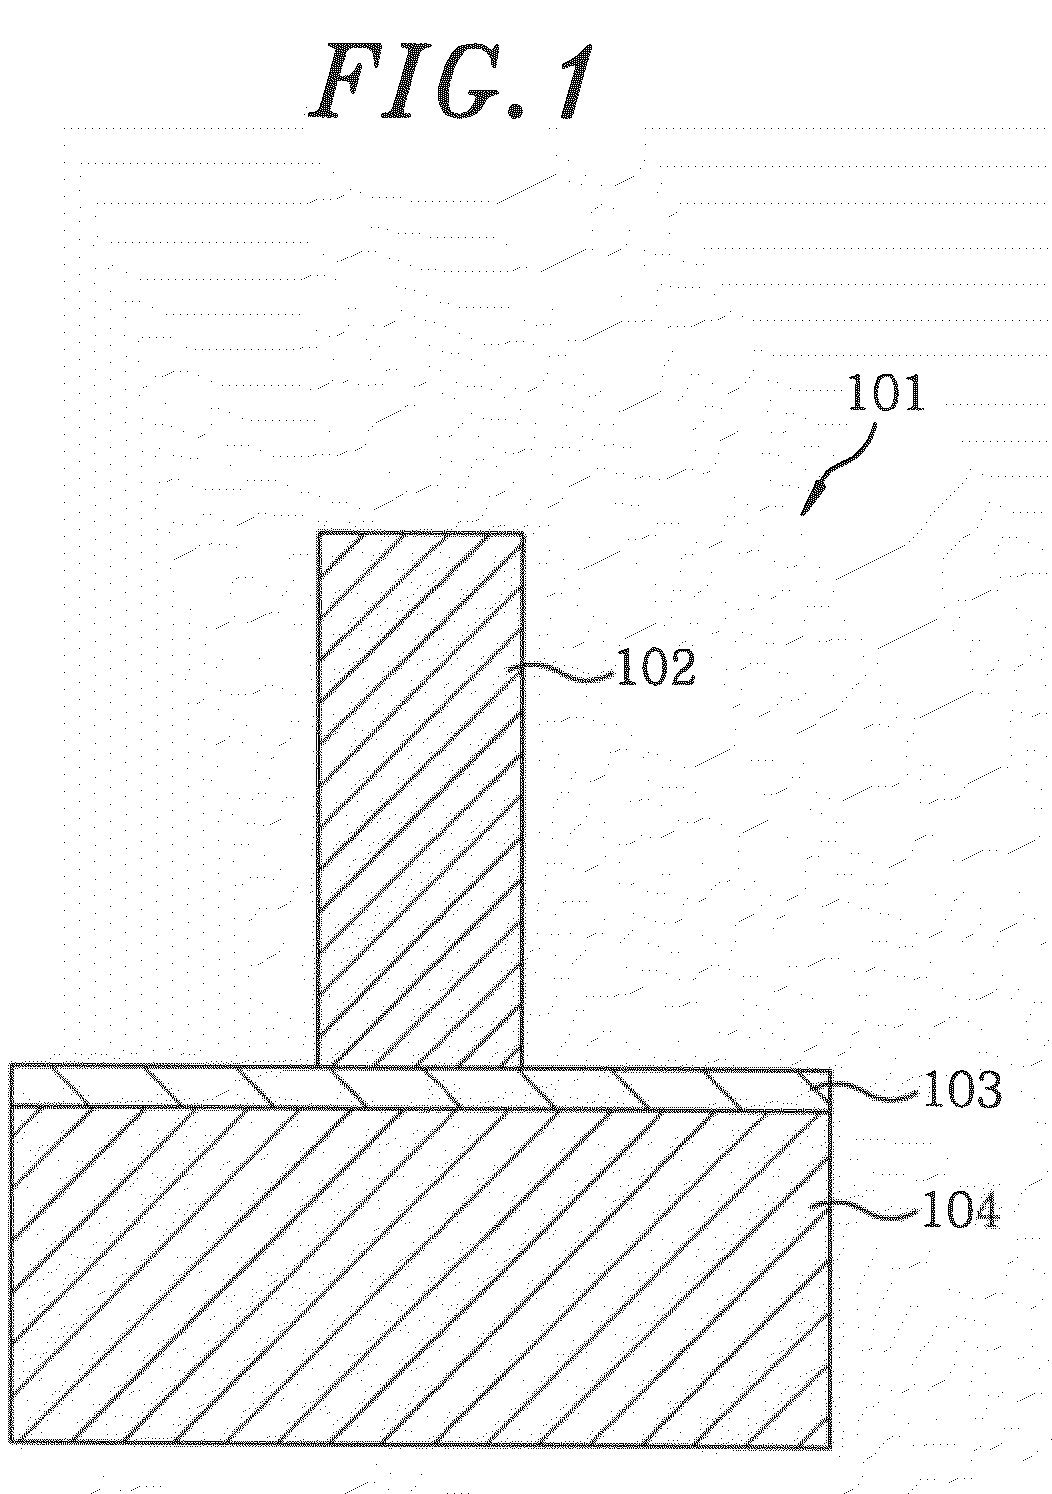 Plasma etching method and computer-readable storage medium